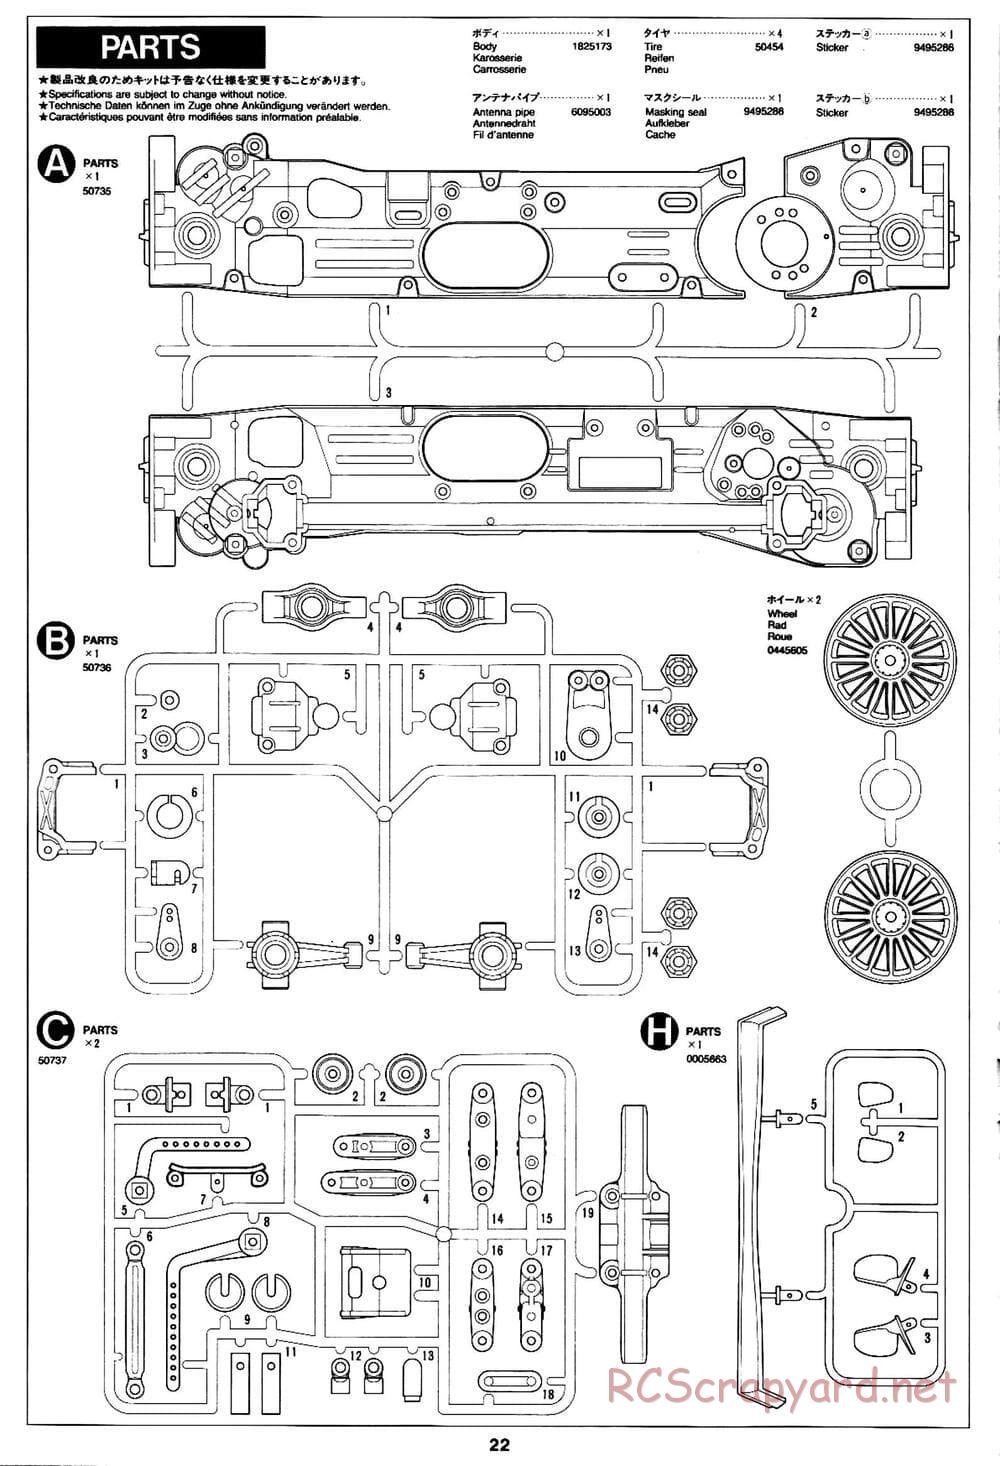 Tamiya - Peugeot 406 ST - TL-01 Chassis - Manual - Page 22